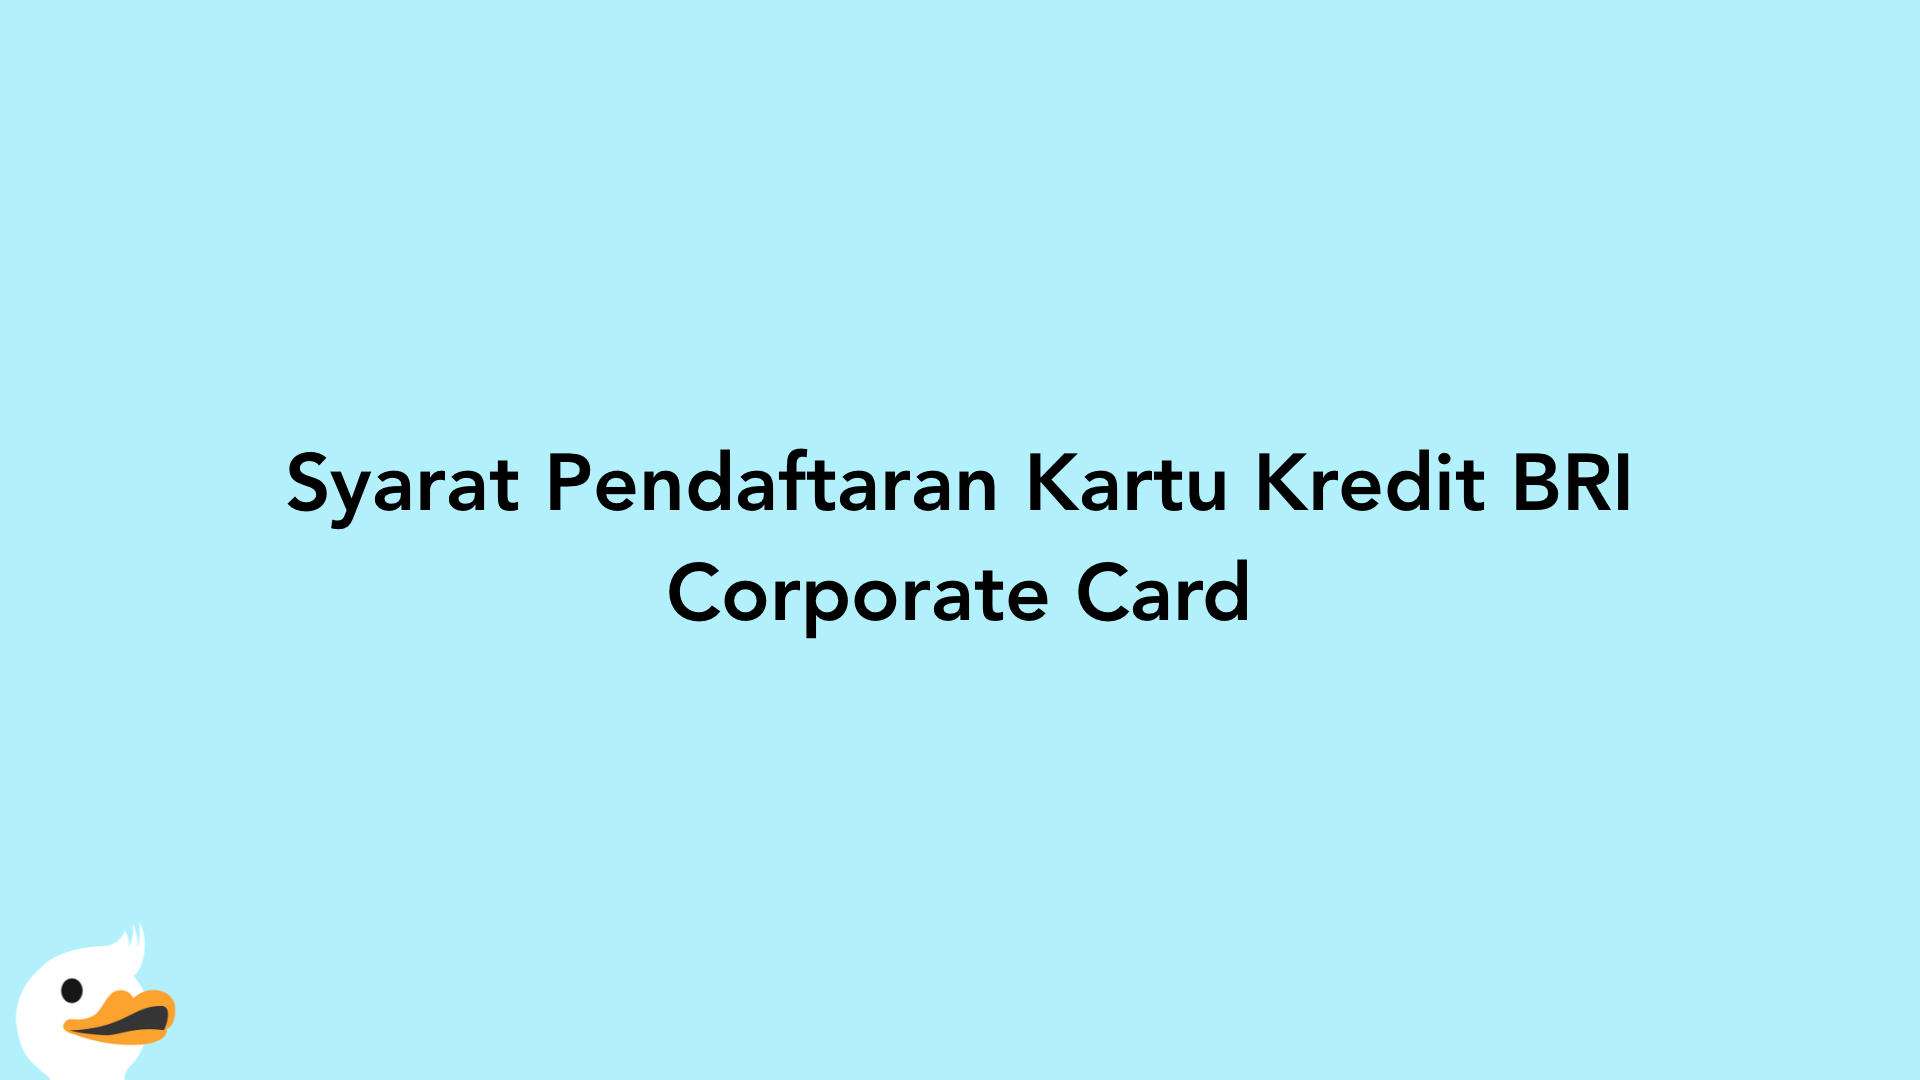 Syarat Pendaftaran Kartu Kredit BRI Corporate Card